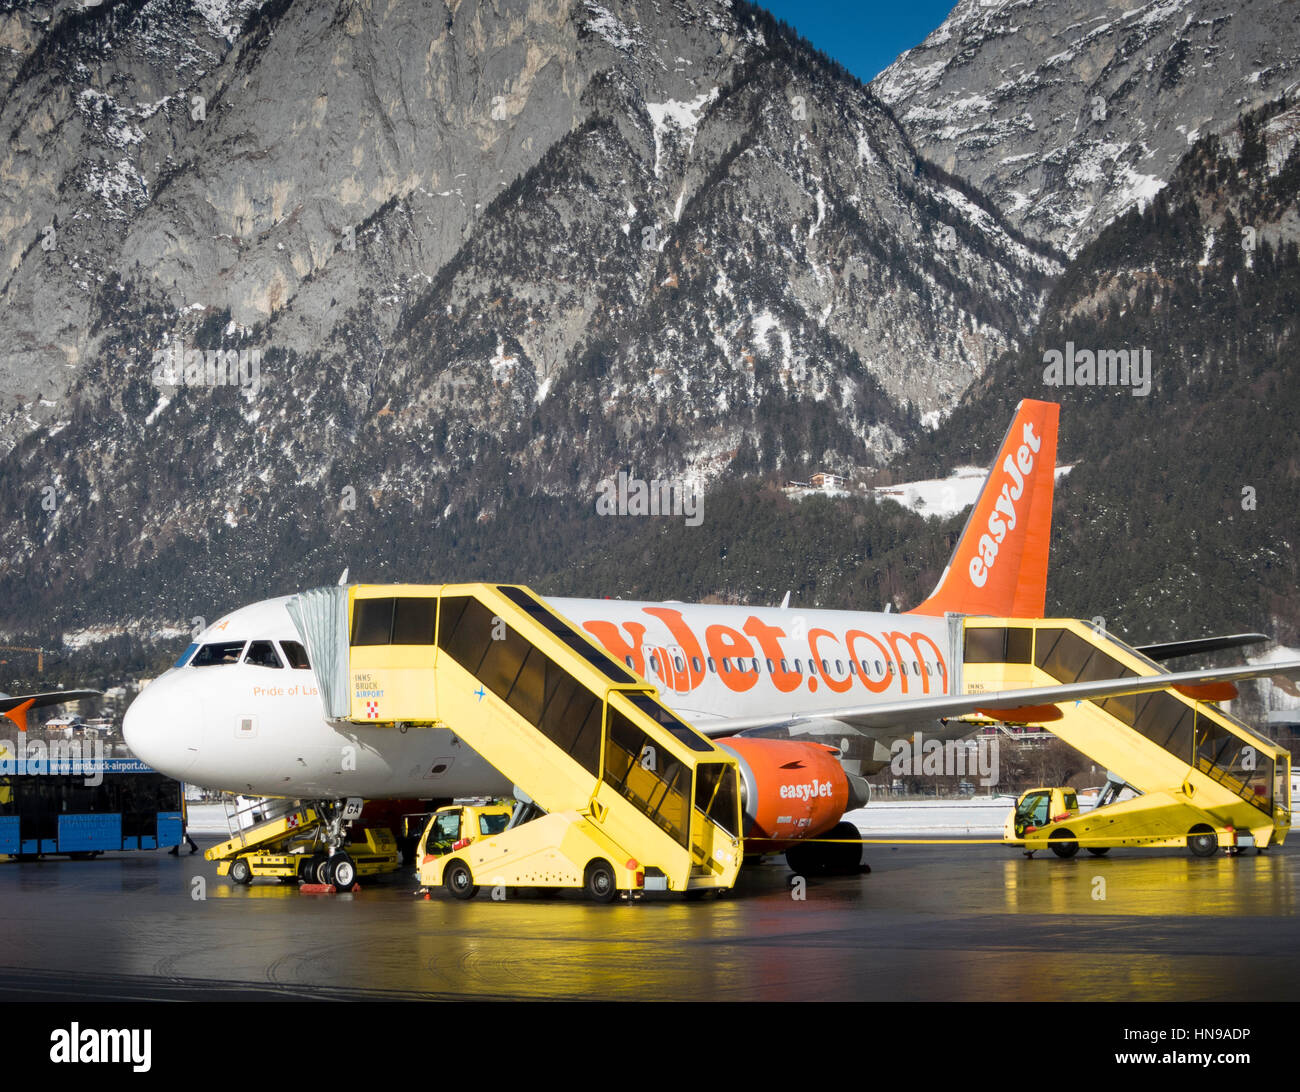 Easy Jet Plane at Innsbruck airport Stock Photo